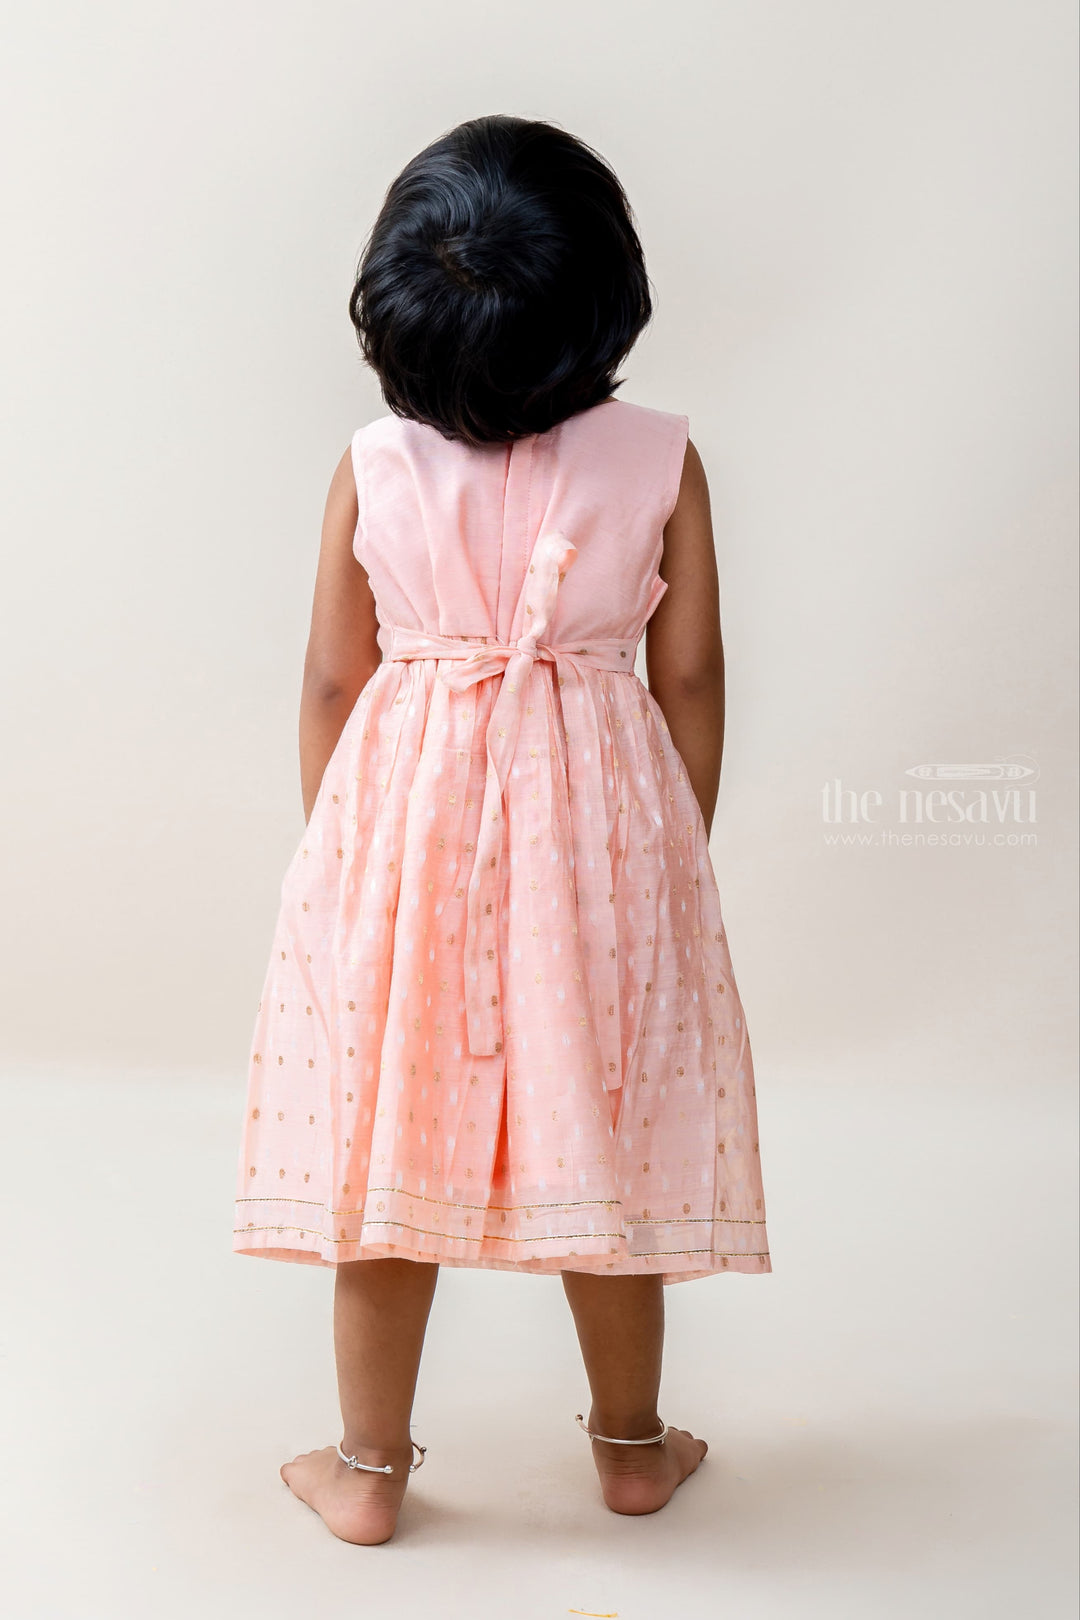 The Nesavu Frocks & Dresses Pretty Pink Cotton Comfy Sleeveless Collection For Baby Girls psr silks Nesavu